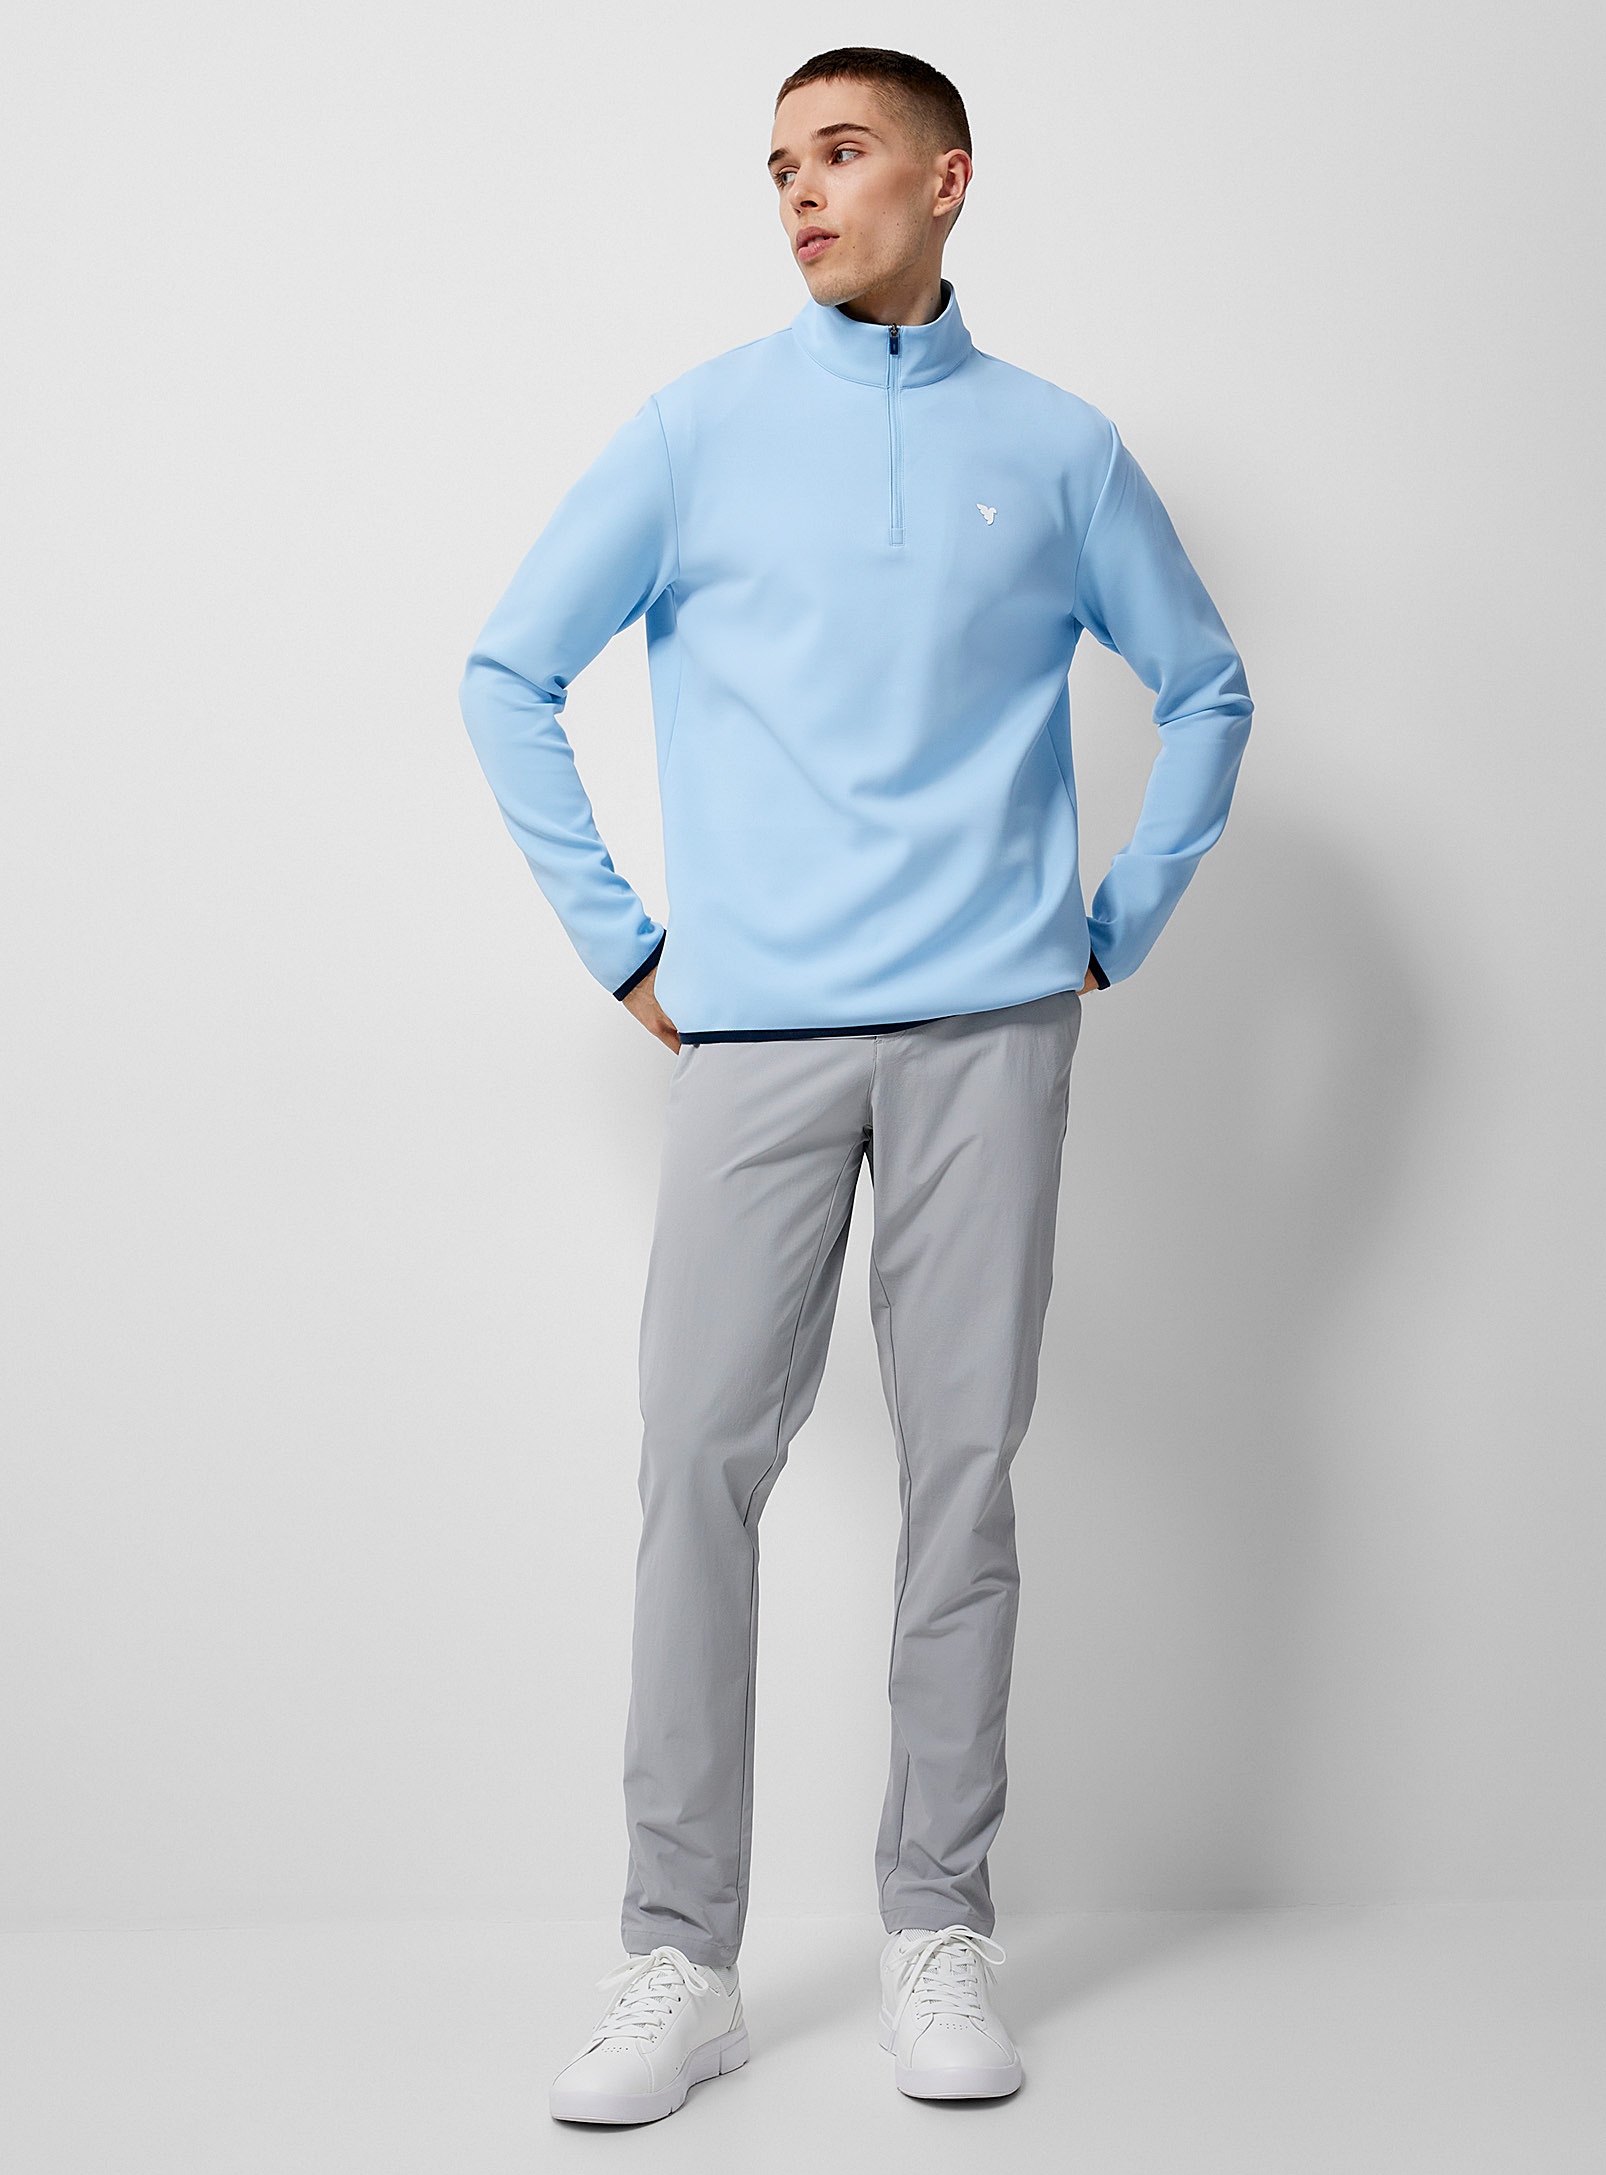 Macade - Le pantalon de golf extensible Lightweight